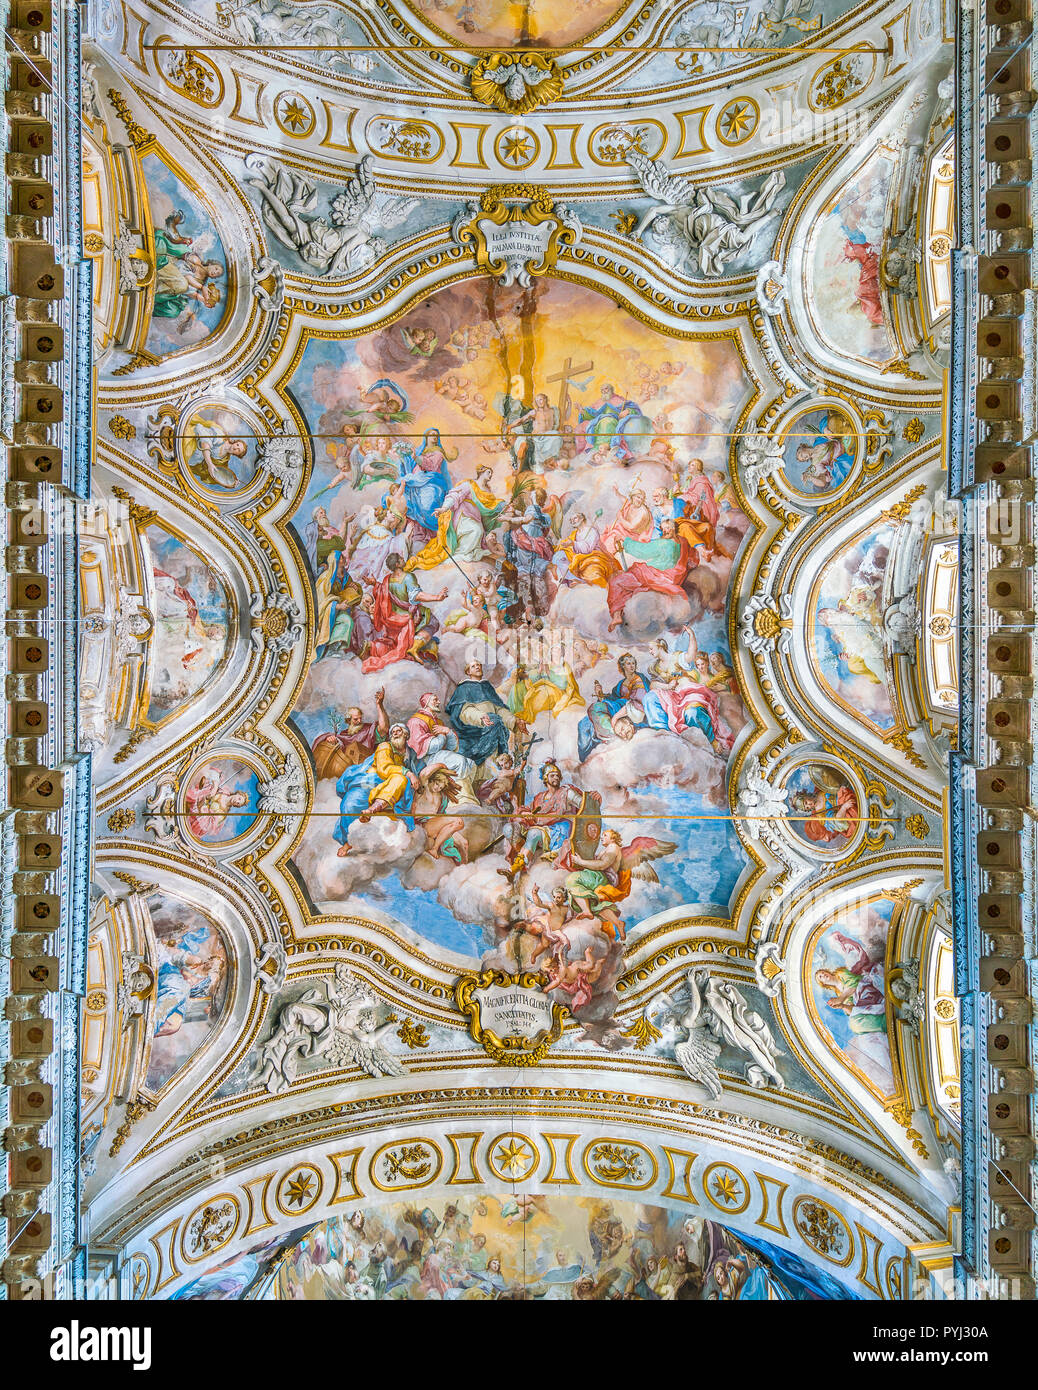 Fresco 'Trionfo di Santa Caterina' by Filippo Randazzo in the Church of Santa Caterina in Palermo. Sicily, southern Italy. Stock Photo